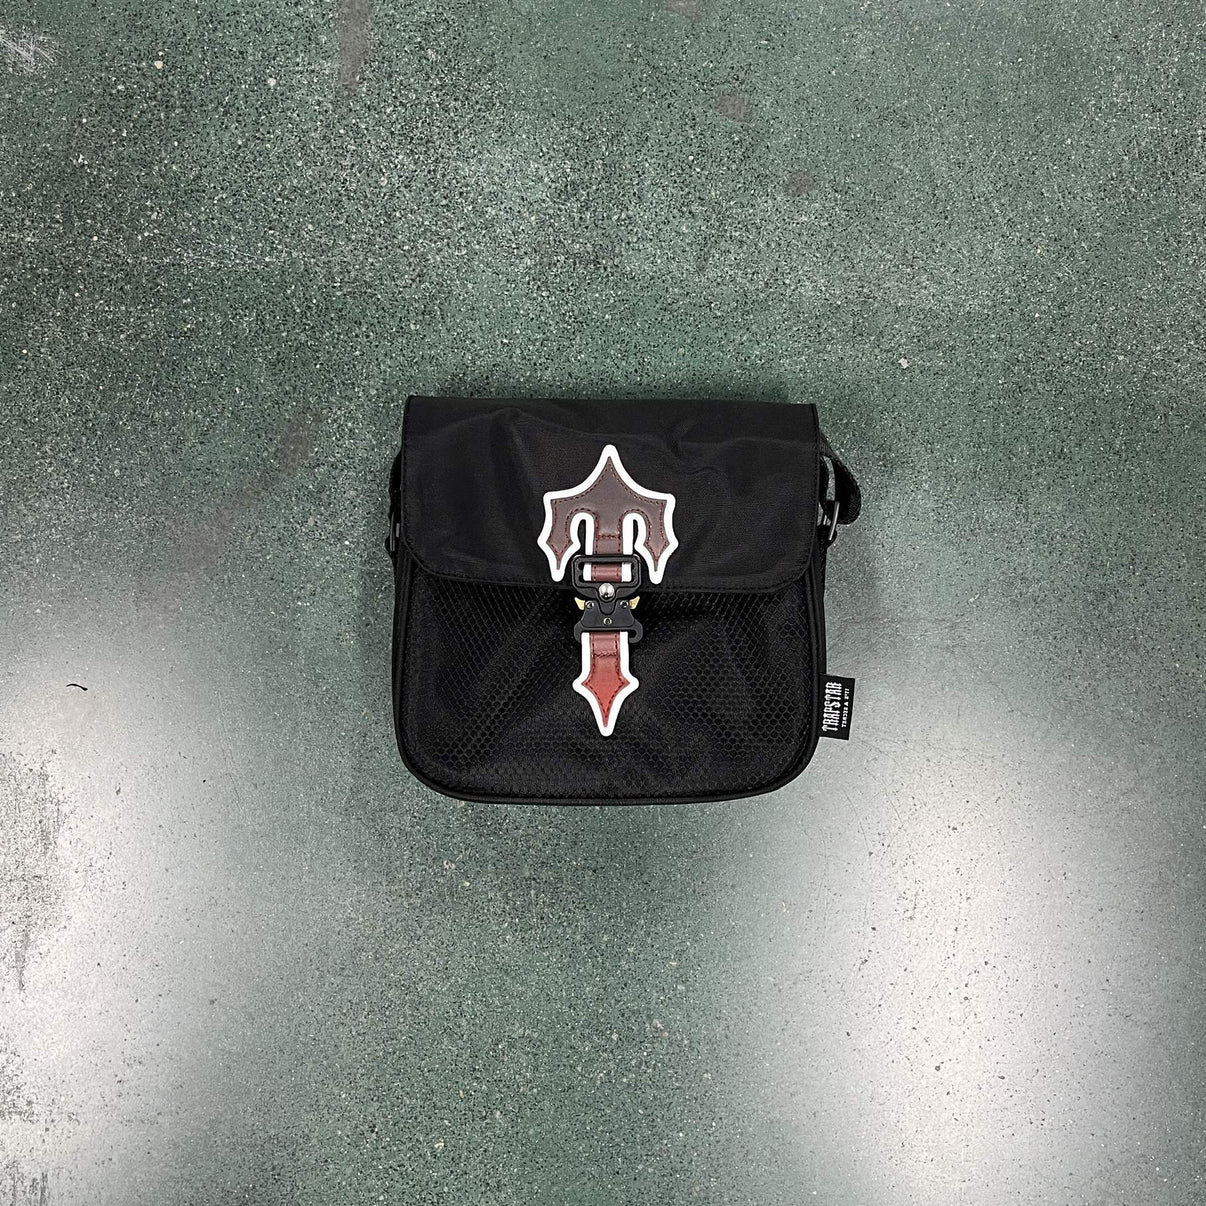 TS MESSENGER BAG 1.0 - BLACK RED GRADIENT TRAPSTAR BAG